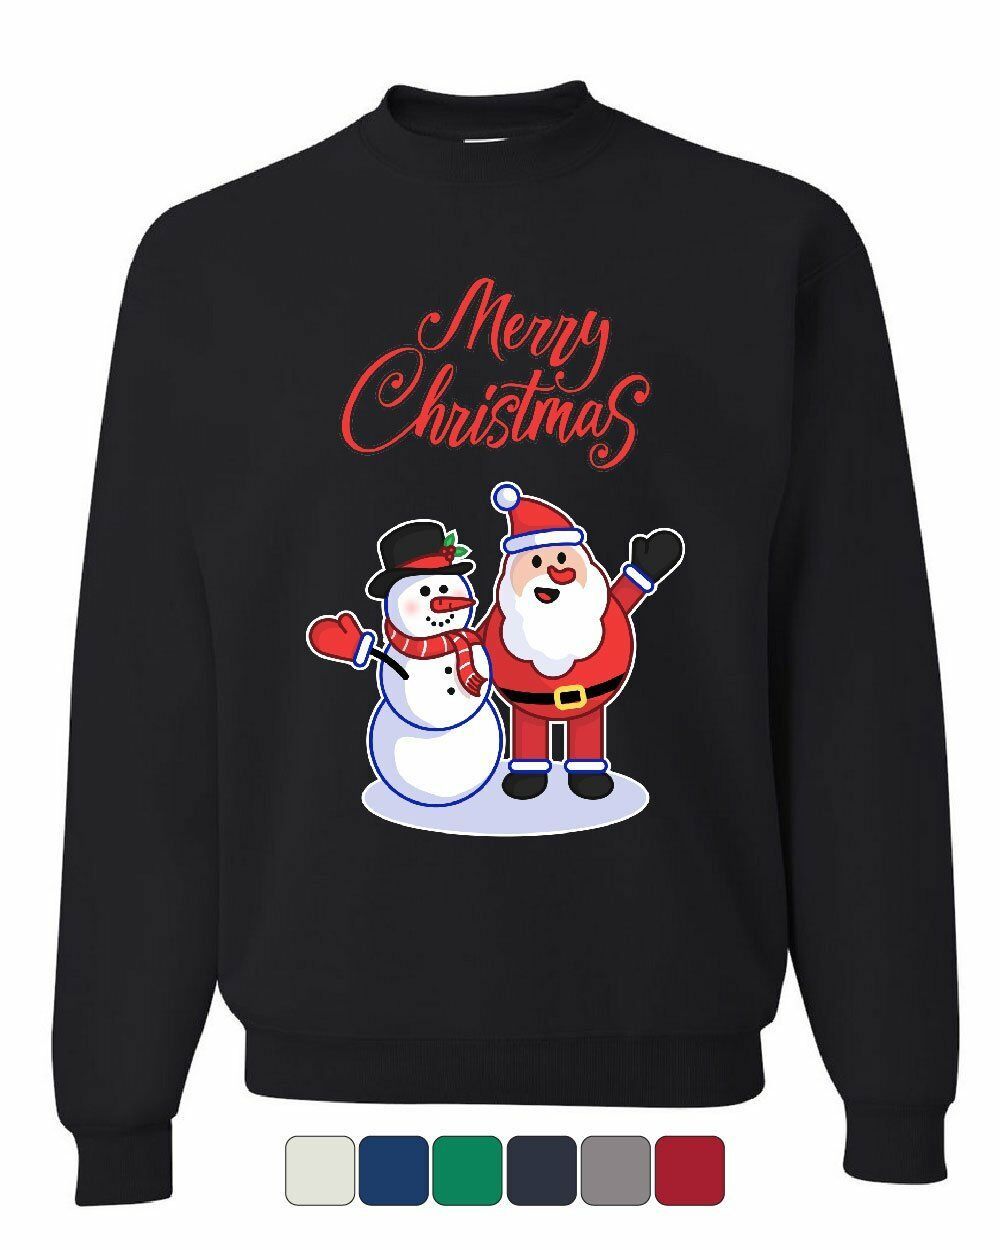 Merry Christmas Santa Snowman Hug Sweatshirt Style: Sweatshirt, Color: Black